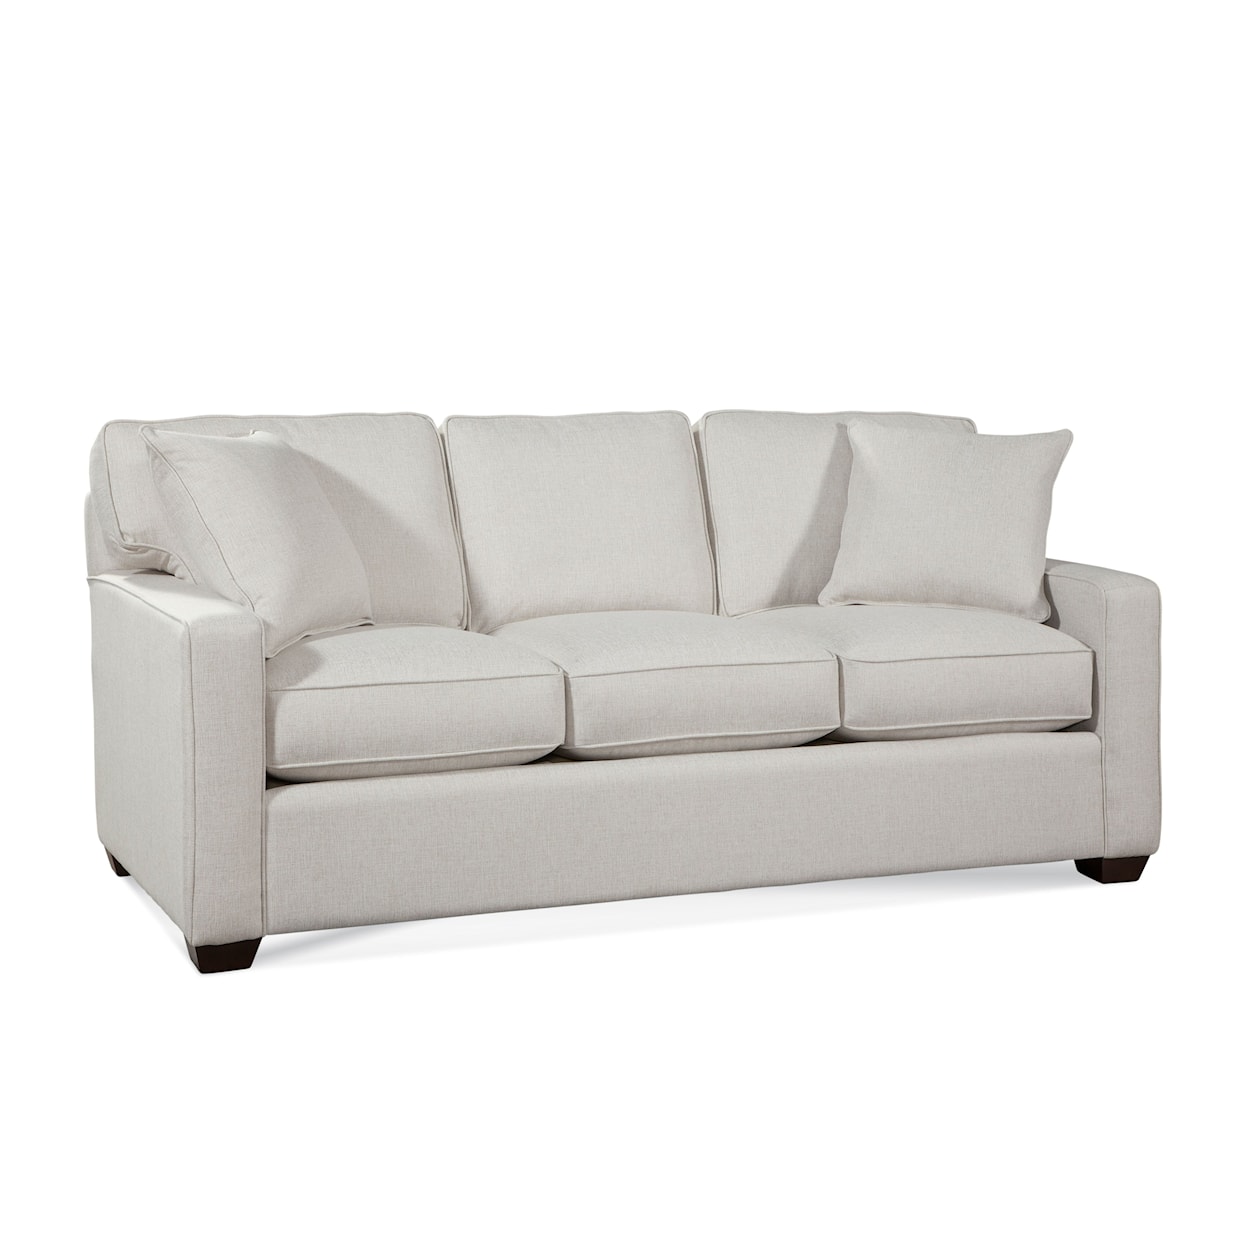 Braxton Culler Gramercy Park Sofa with Throw Pillows